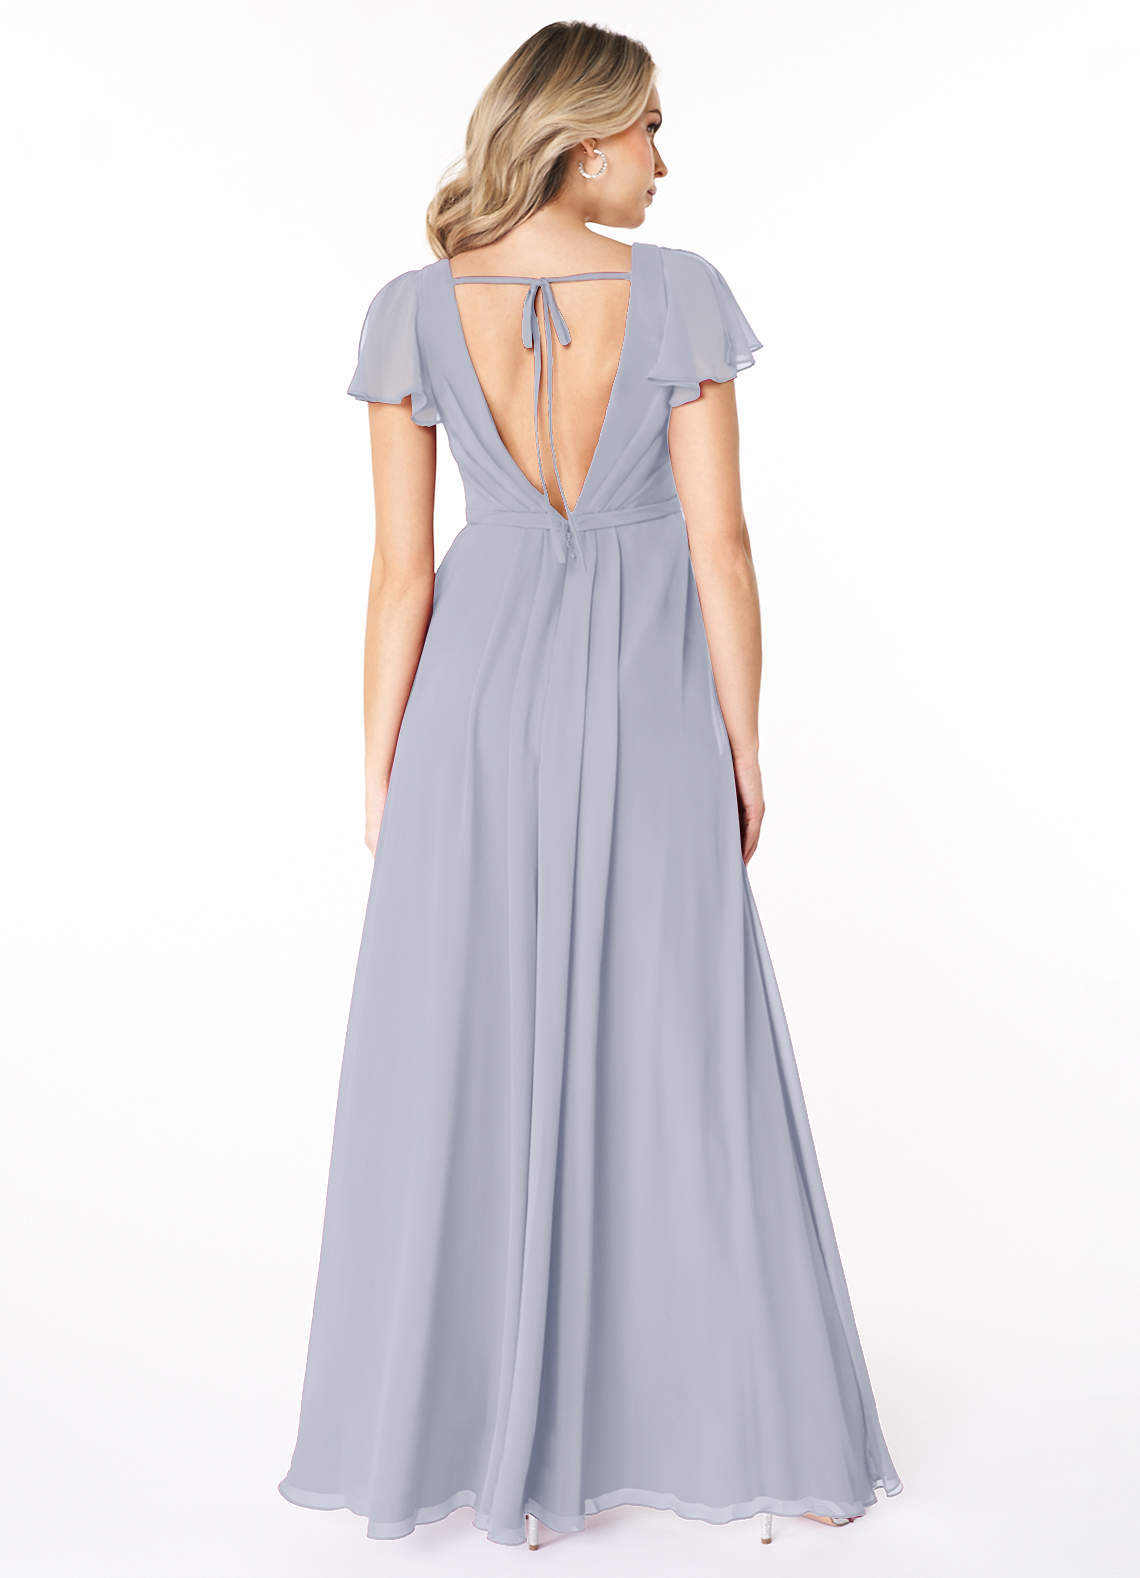 Azazie Reverie Bridesmaid Dresses A-Line V-Neck Ruched Chiffon Floor-Length Dress image1